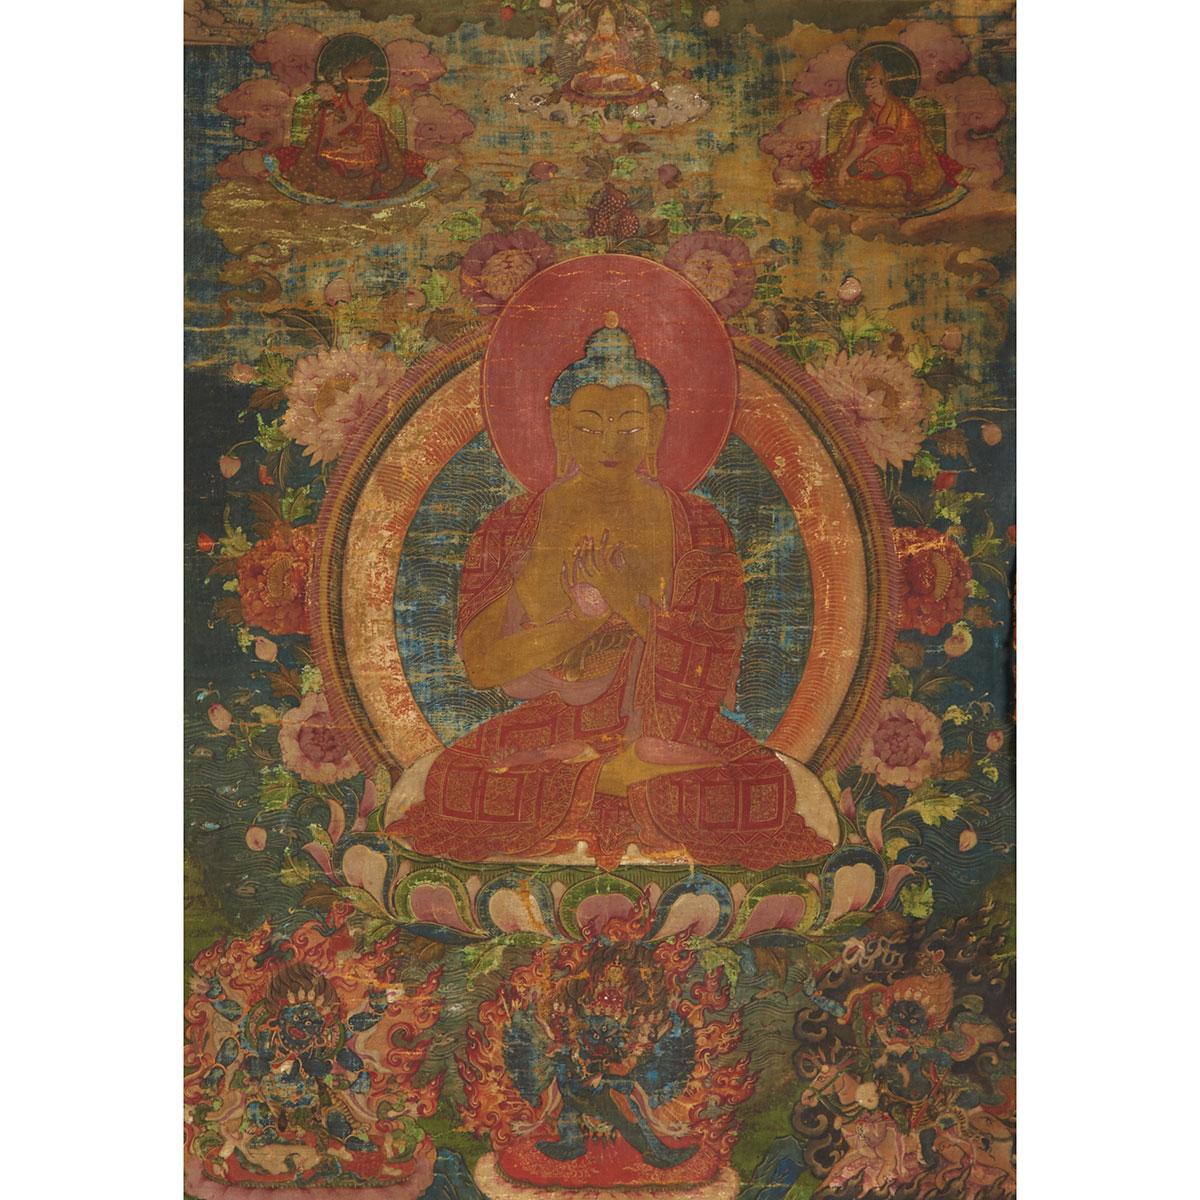 Thangka of Shakyamuni Buddha, Tibet, 18th/19th Century